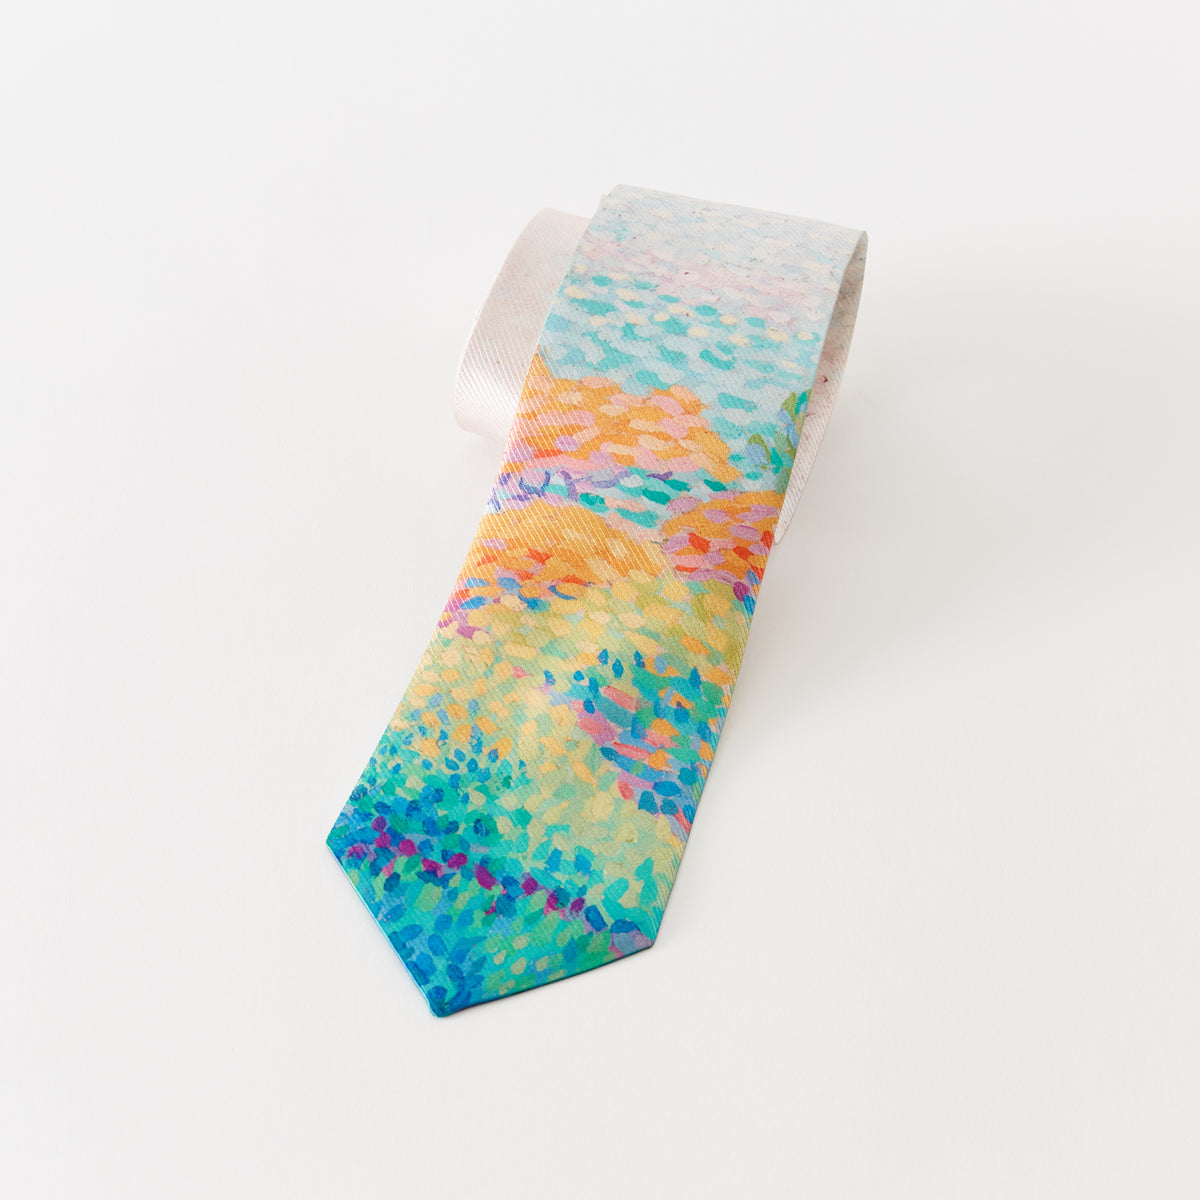 Barnes artwork necktie